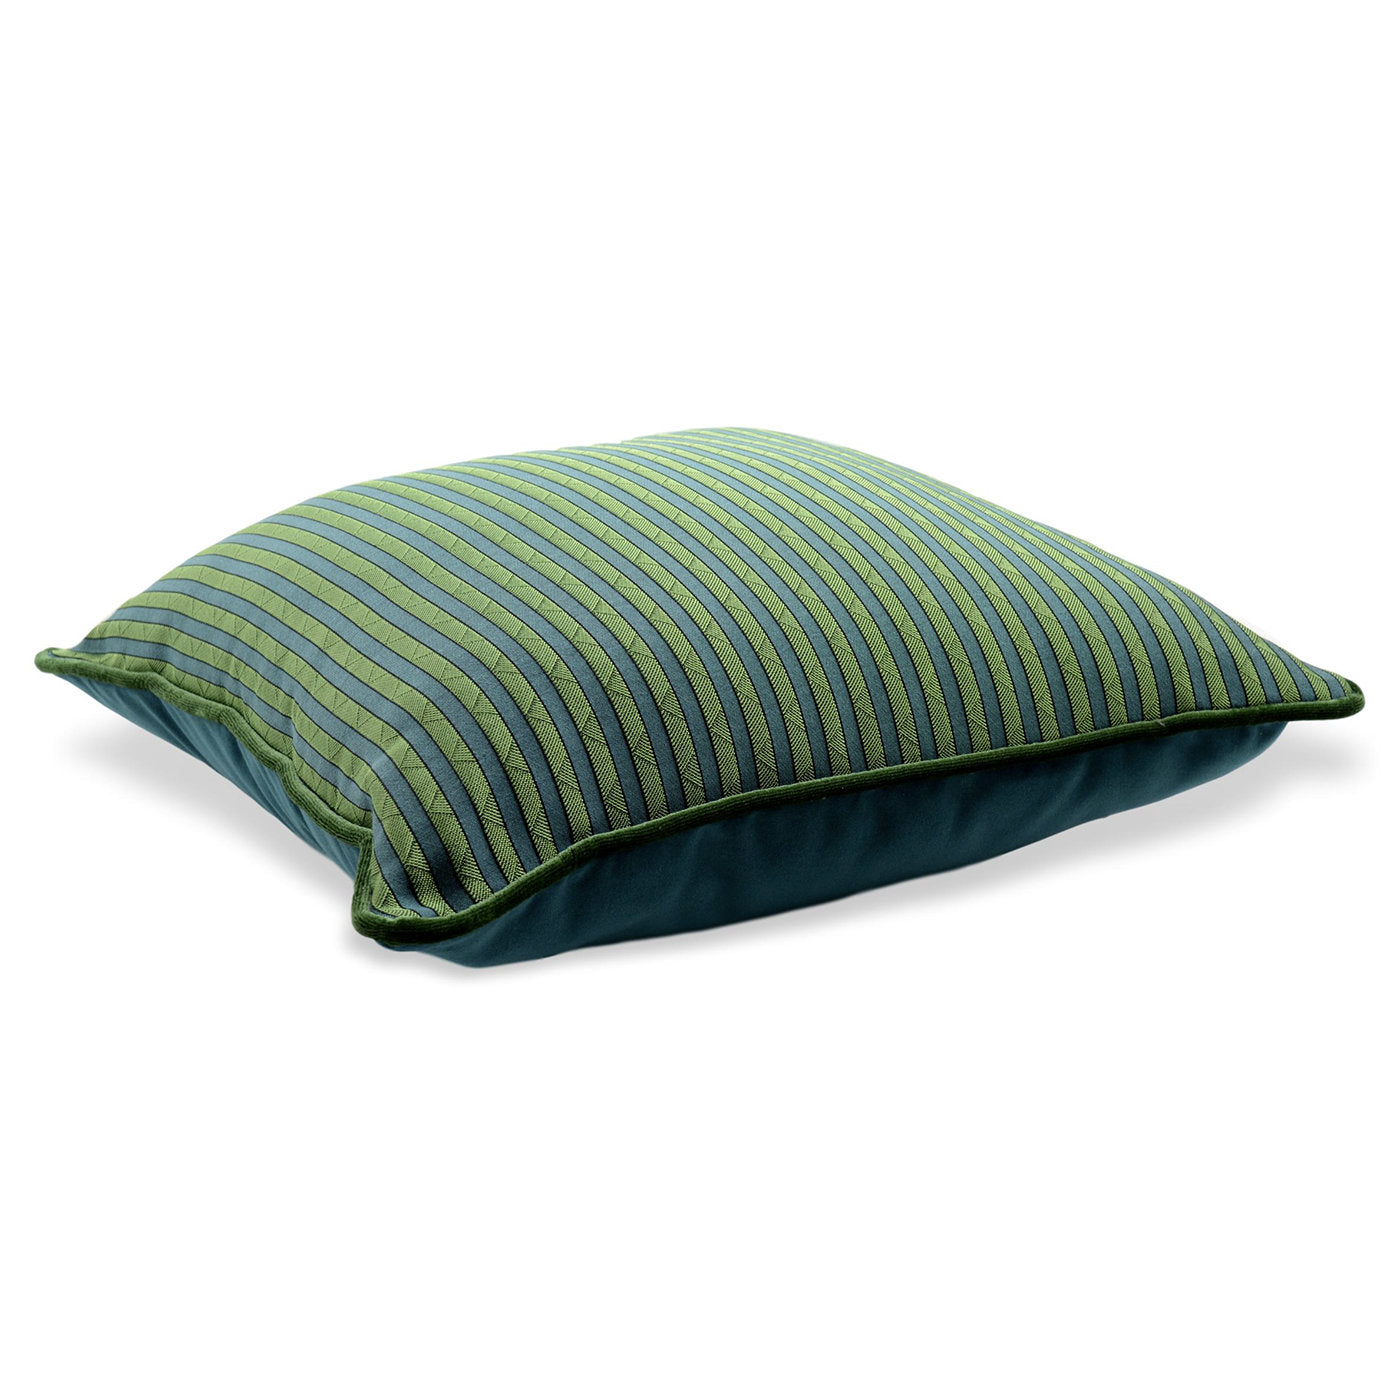 Emerald Carré Cushion in striped jacquard fabric - Alternative view 2